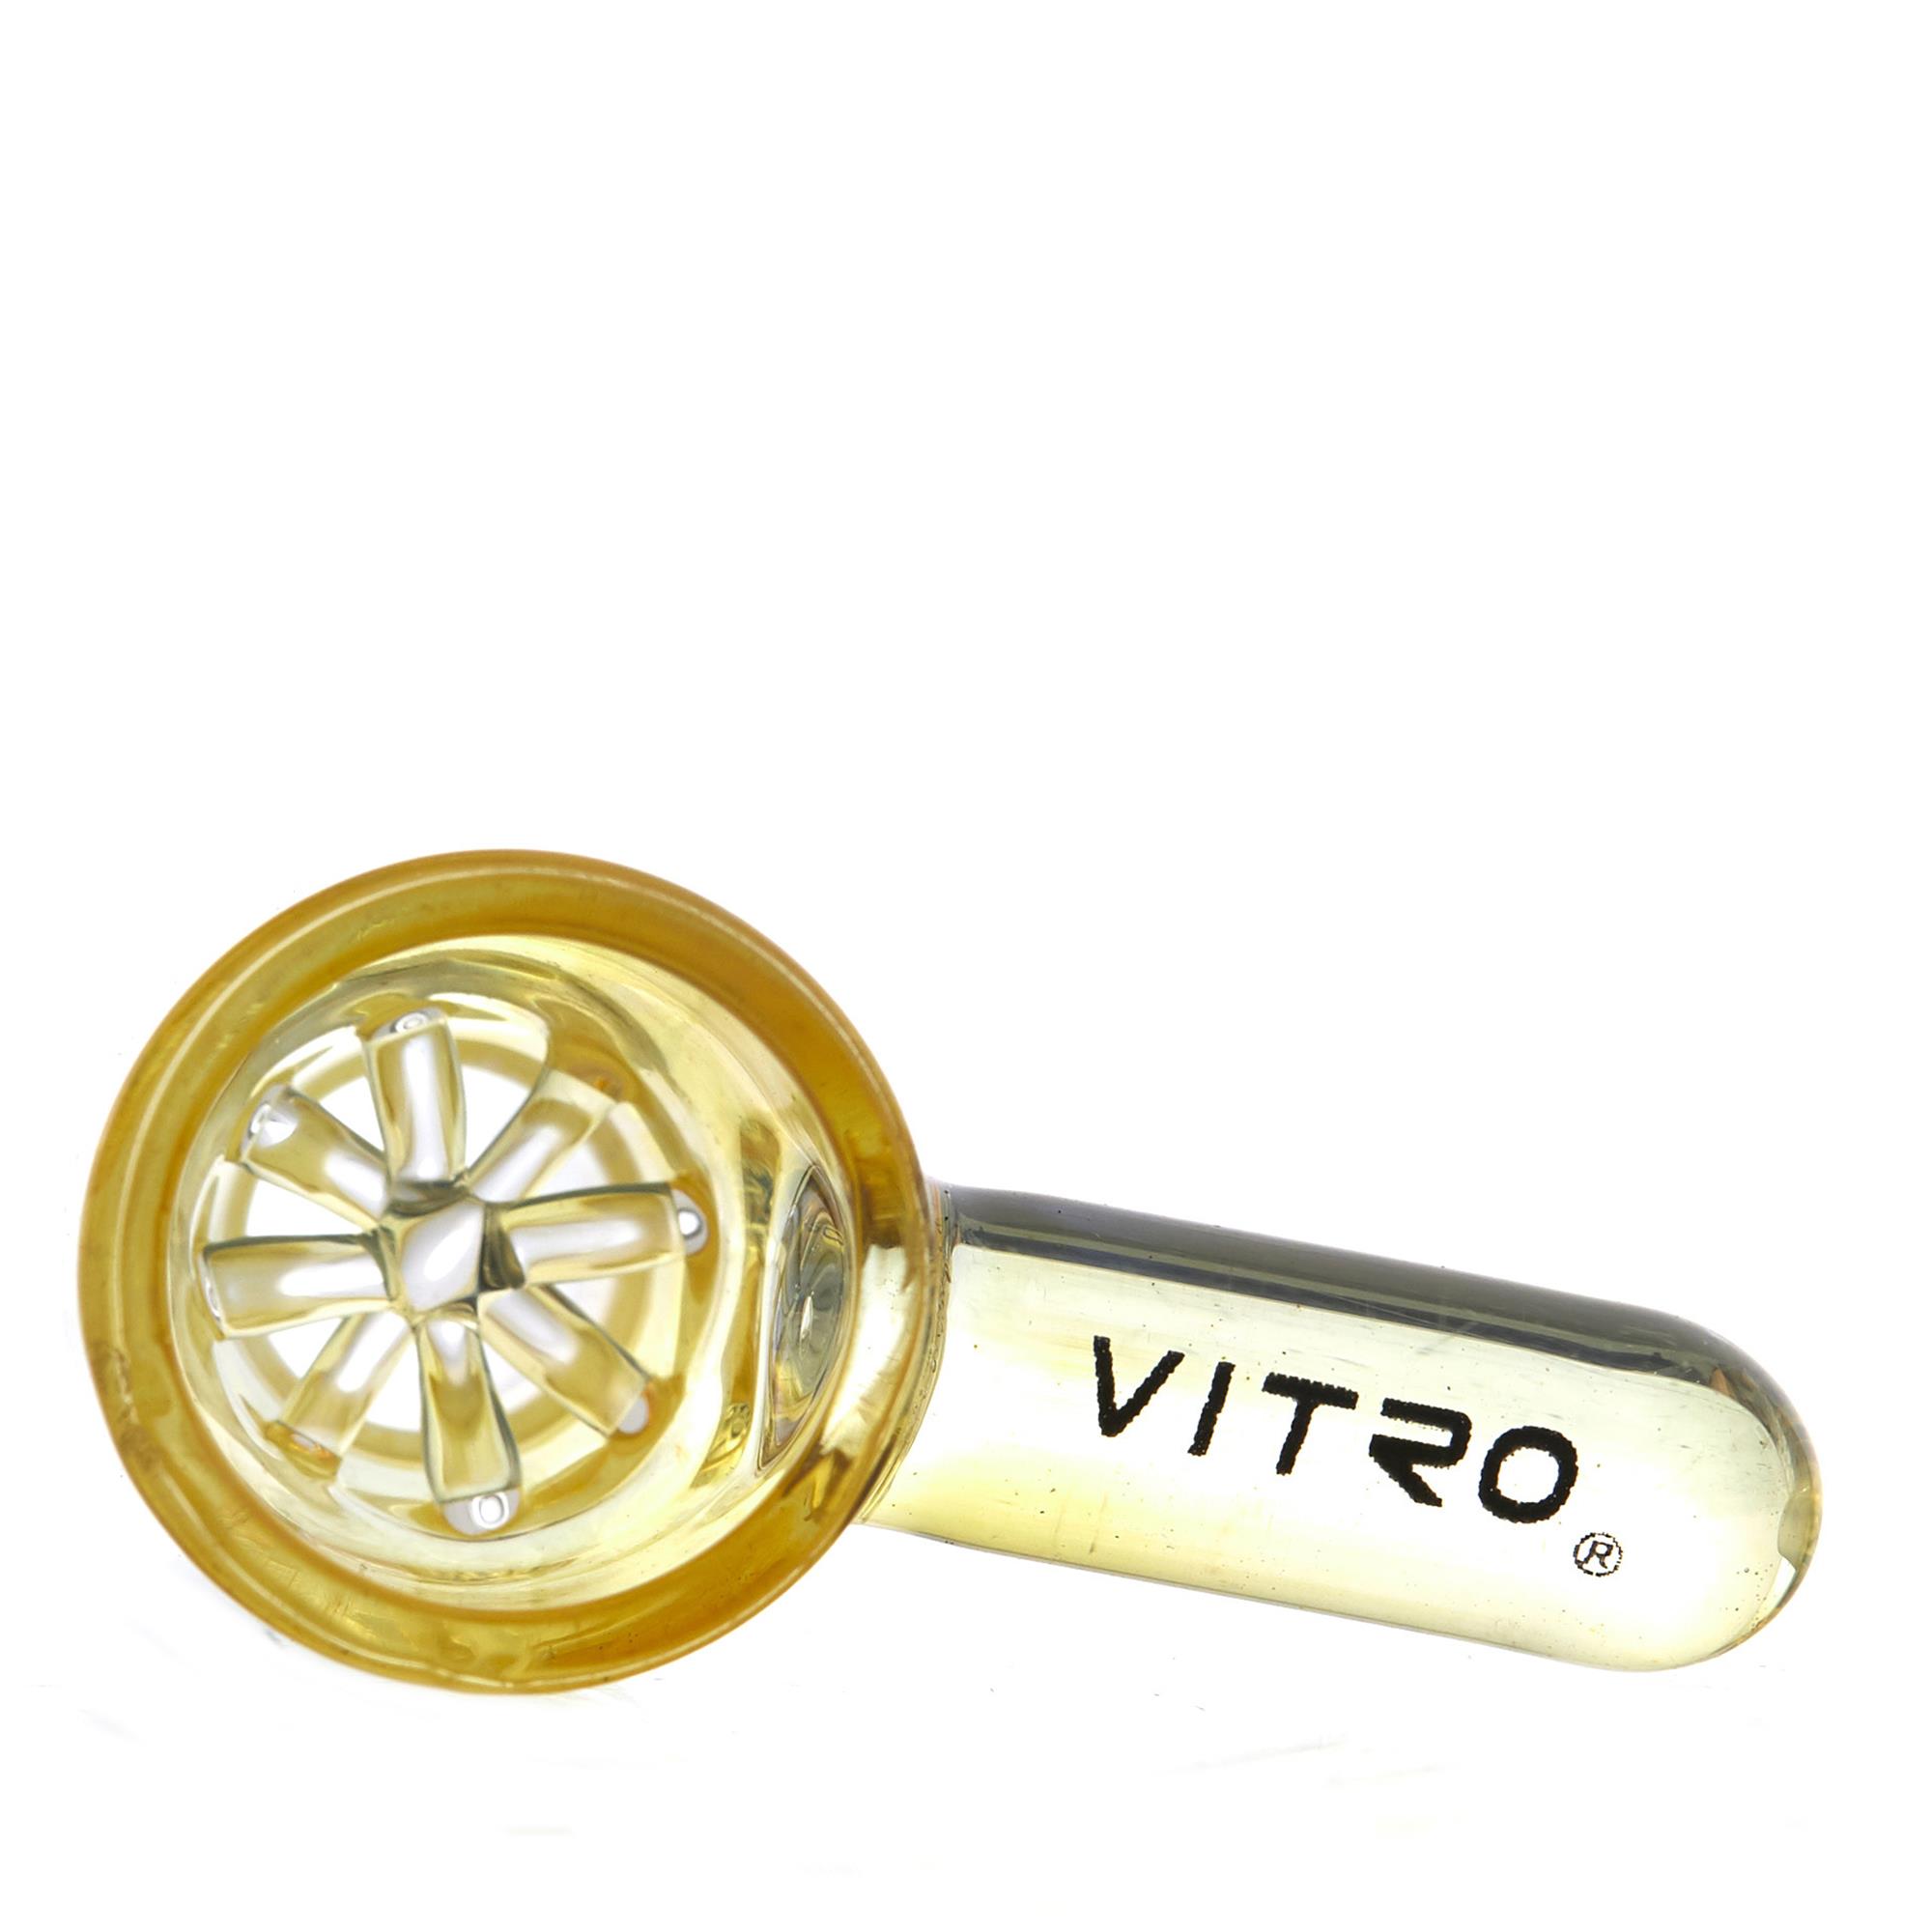 VITRO XL SHOWER HEAD BONG